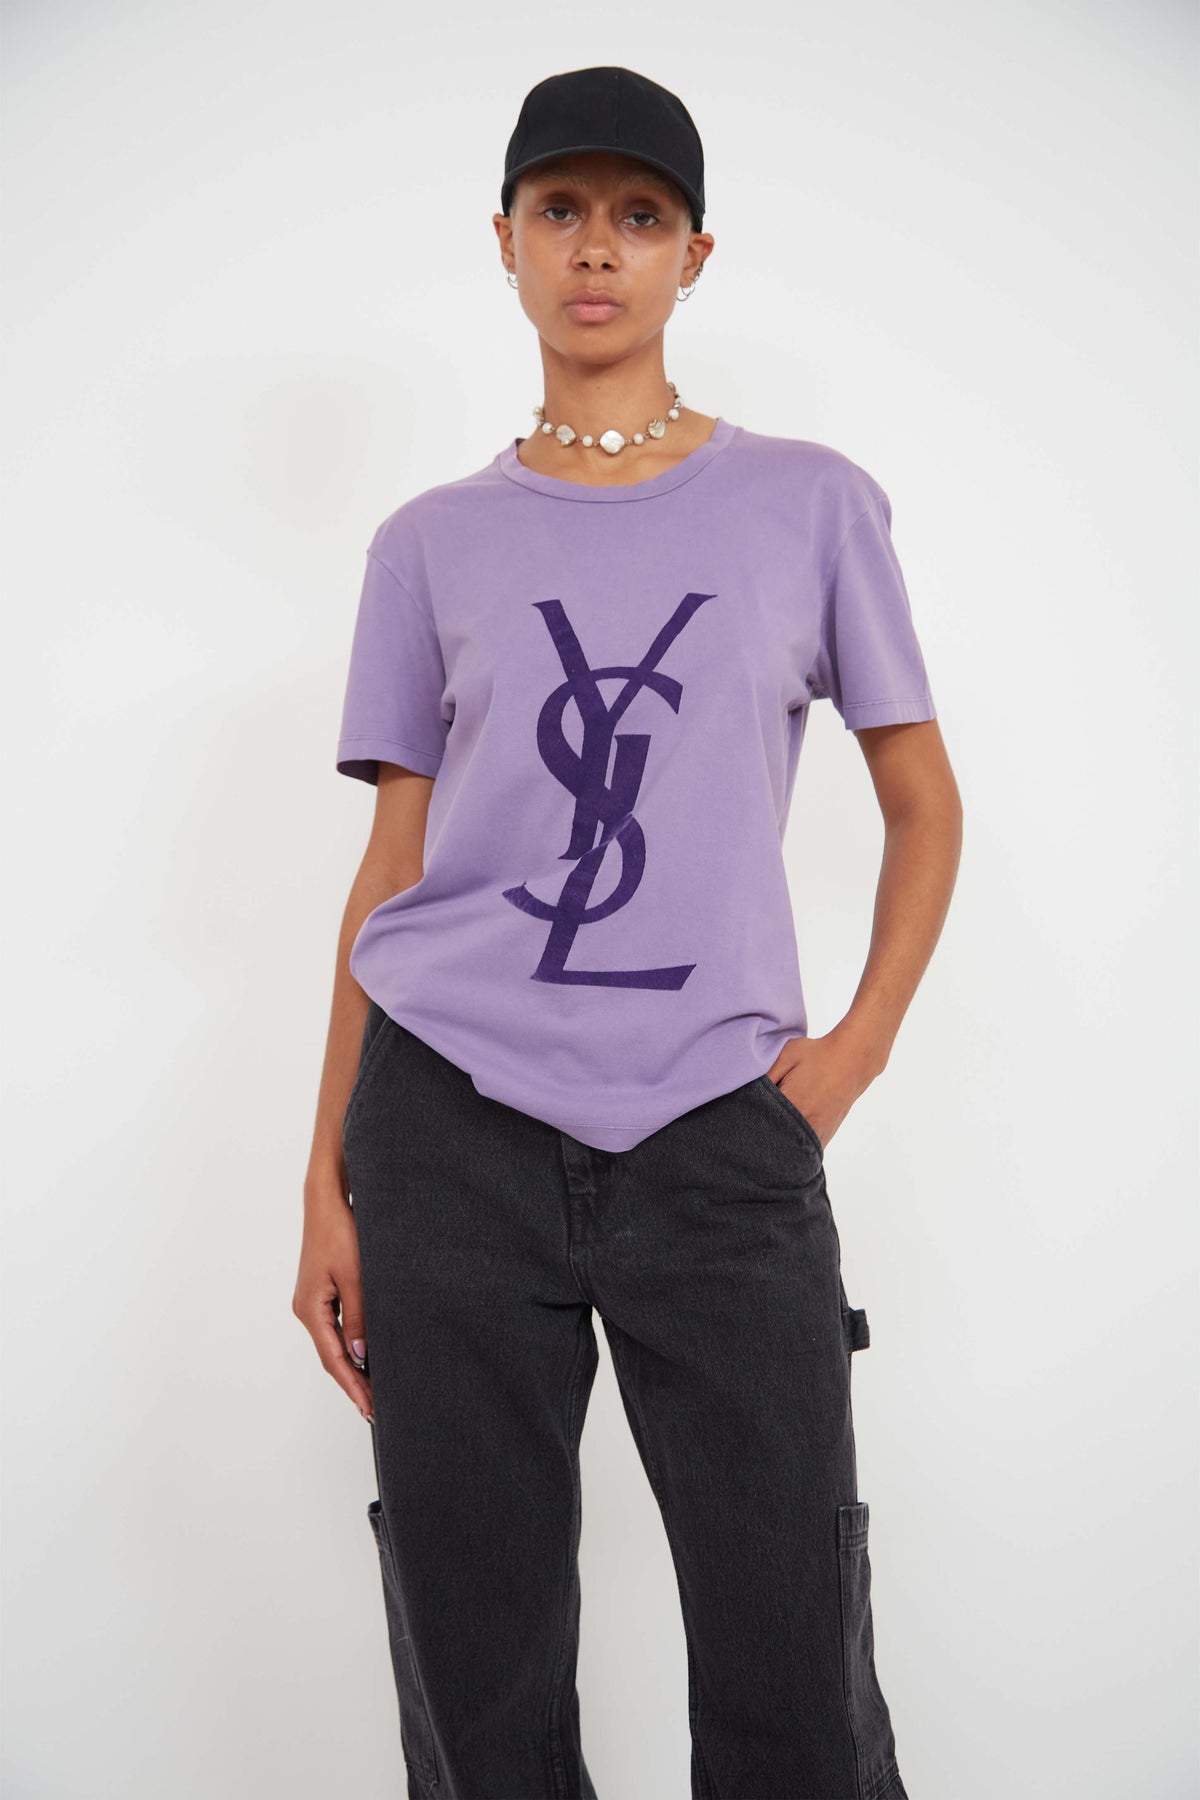 Yves Saint Laurent t-shirt